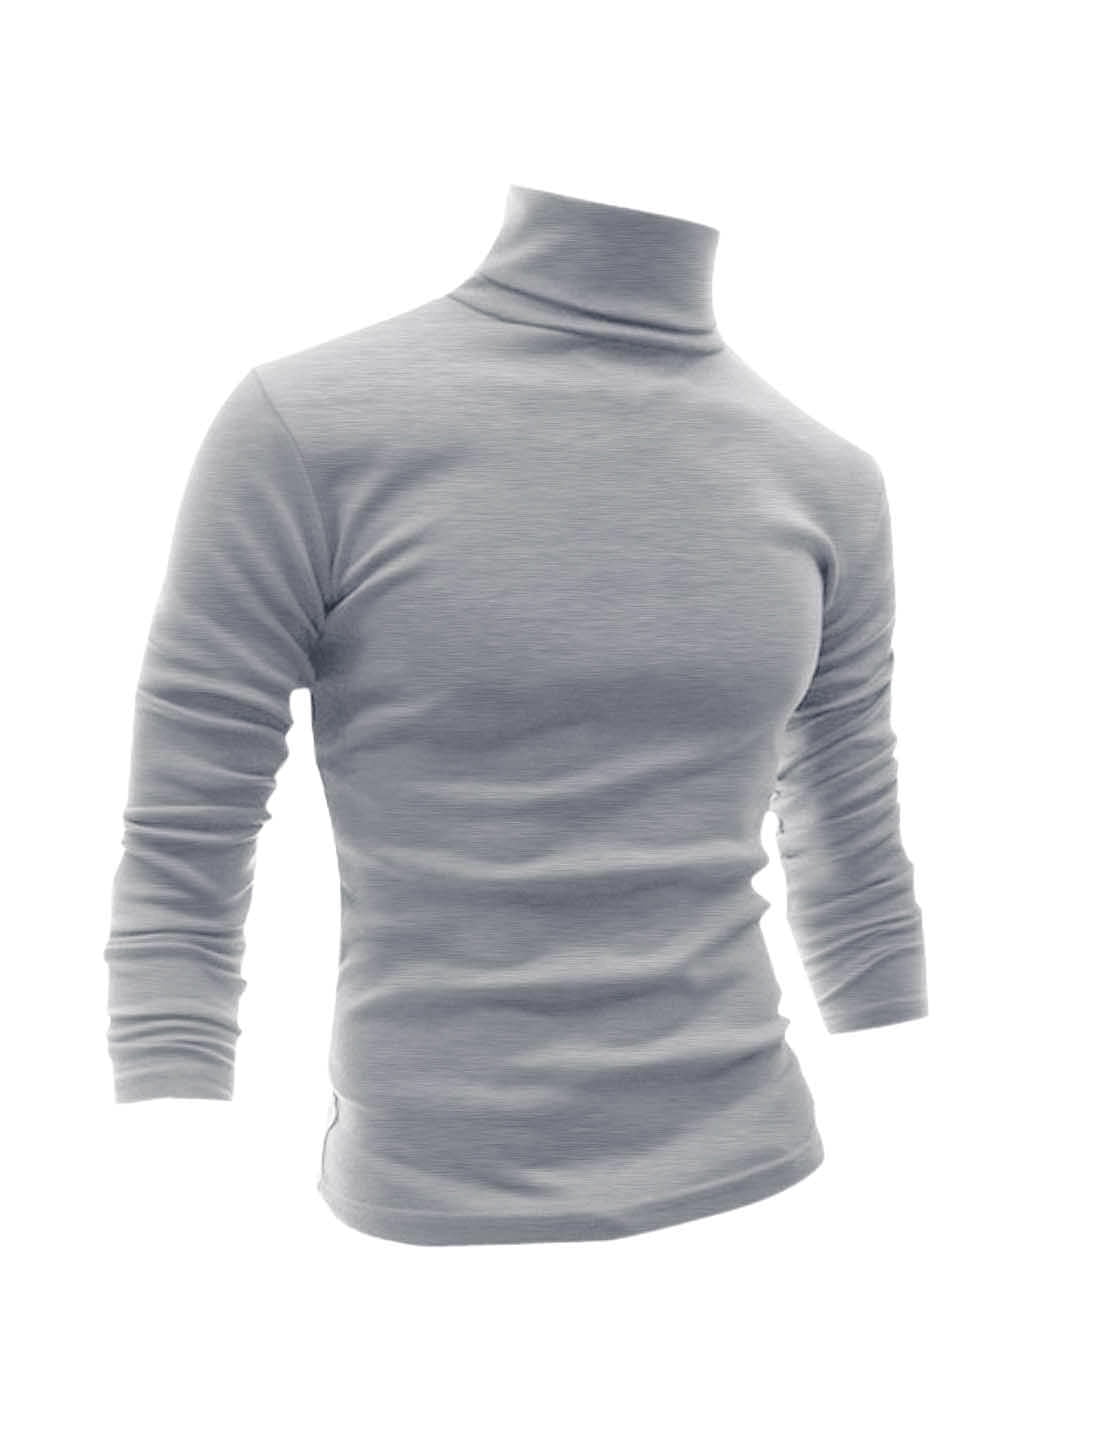 Men Slim Fit Lightweight Long Sleeve Top Turtleneck T-Shirt Light Grey ...